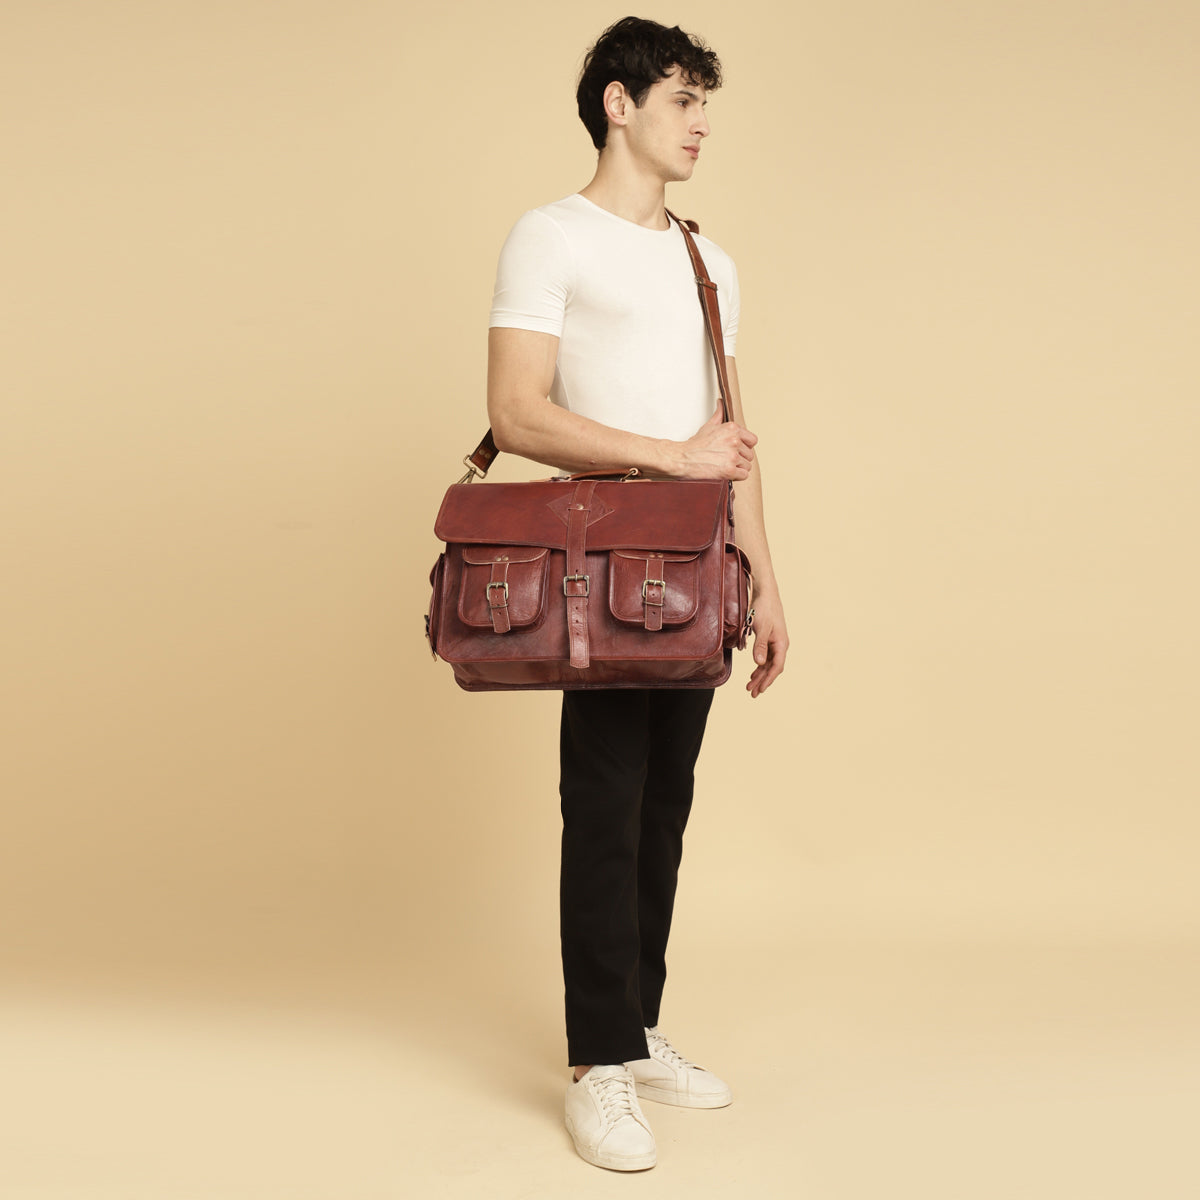 Rustic Brown Leather Messenger Bag